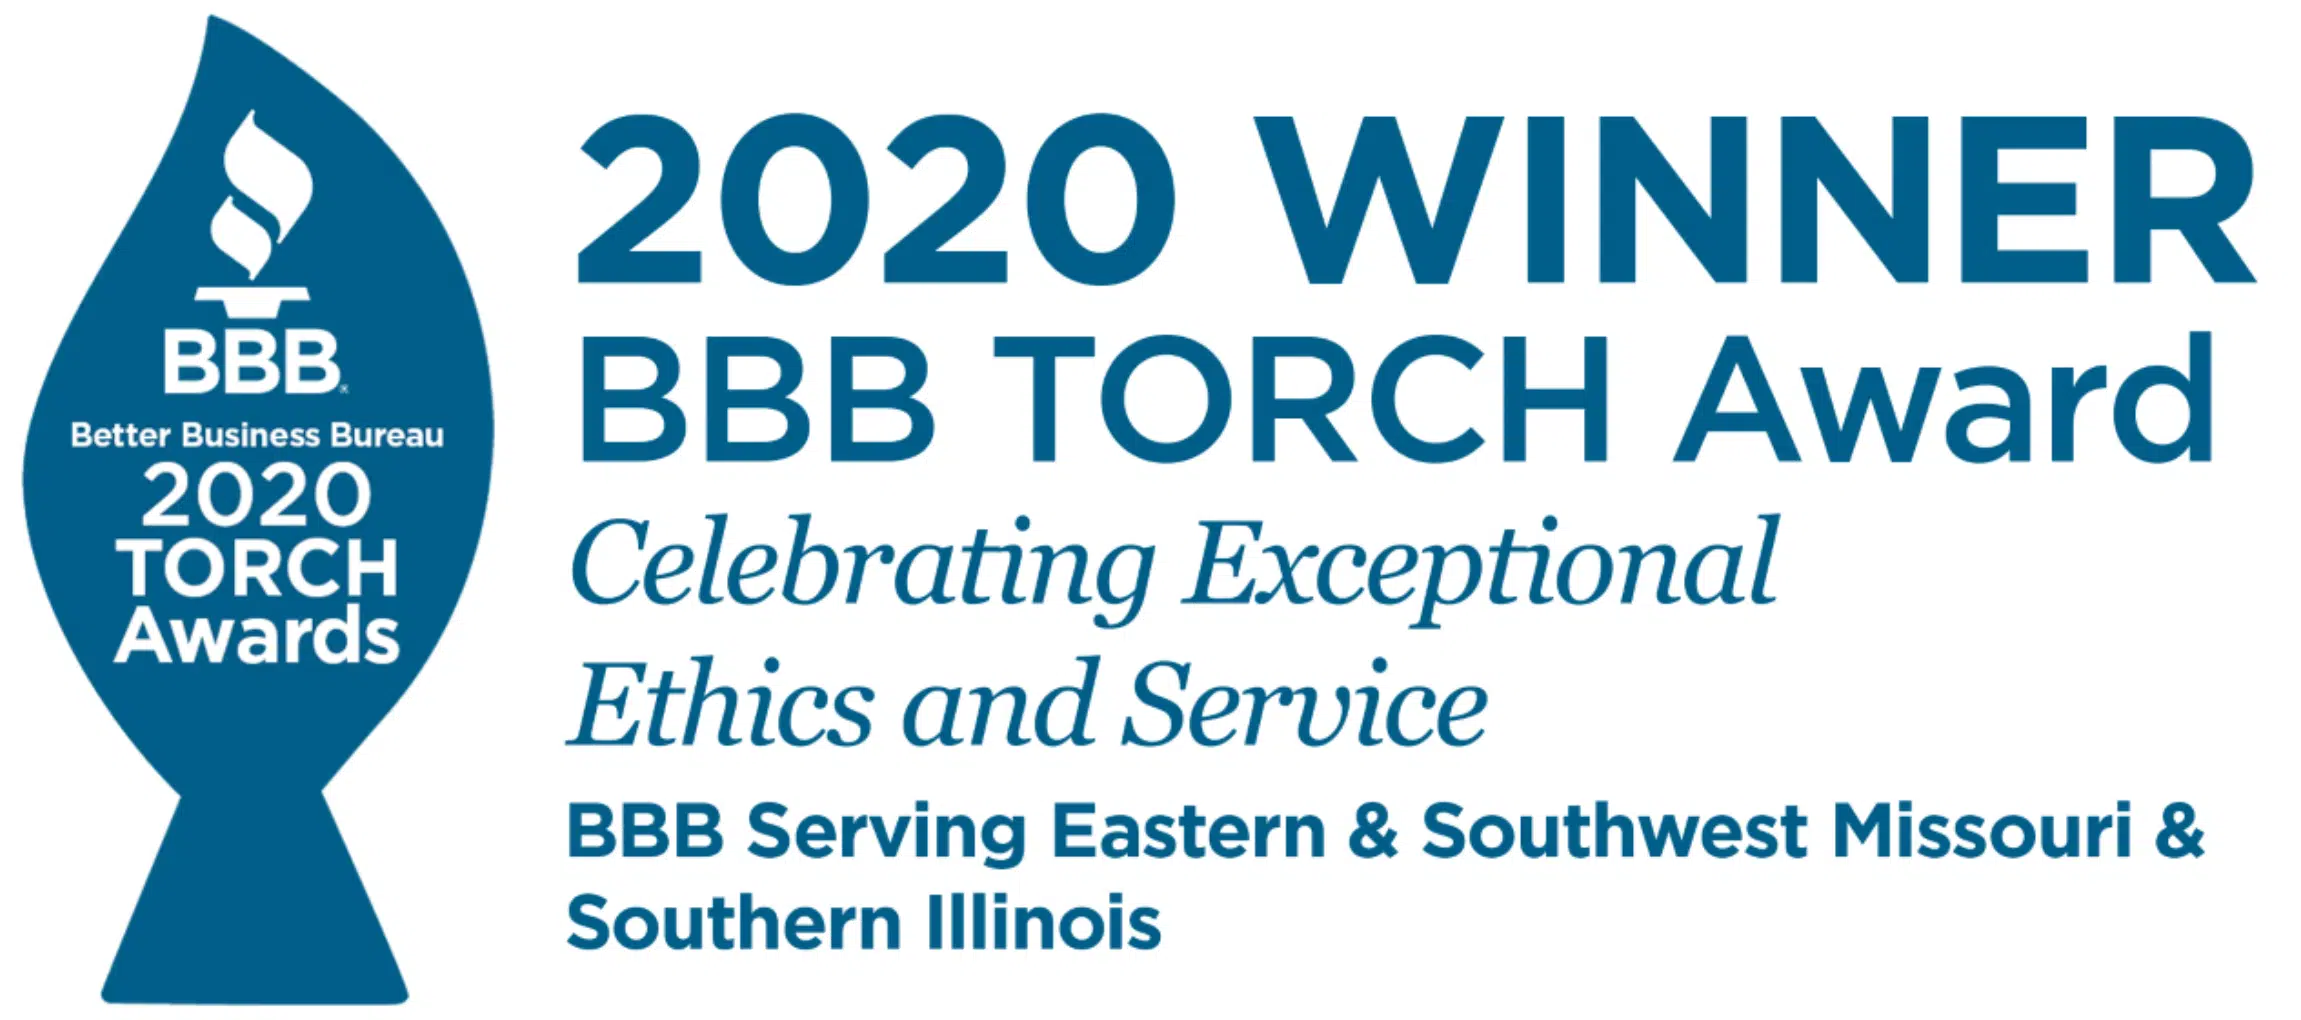 BBB TORCH Award 2020